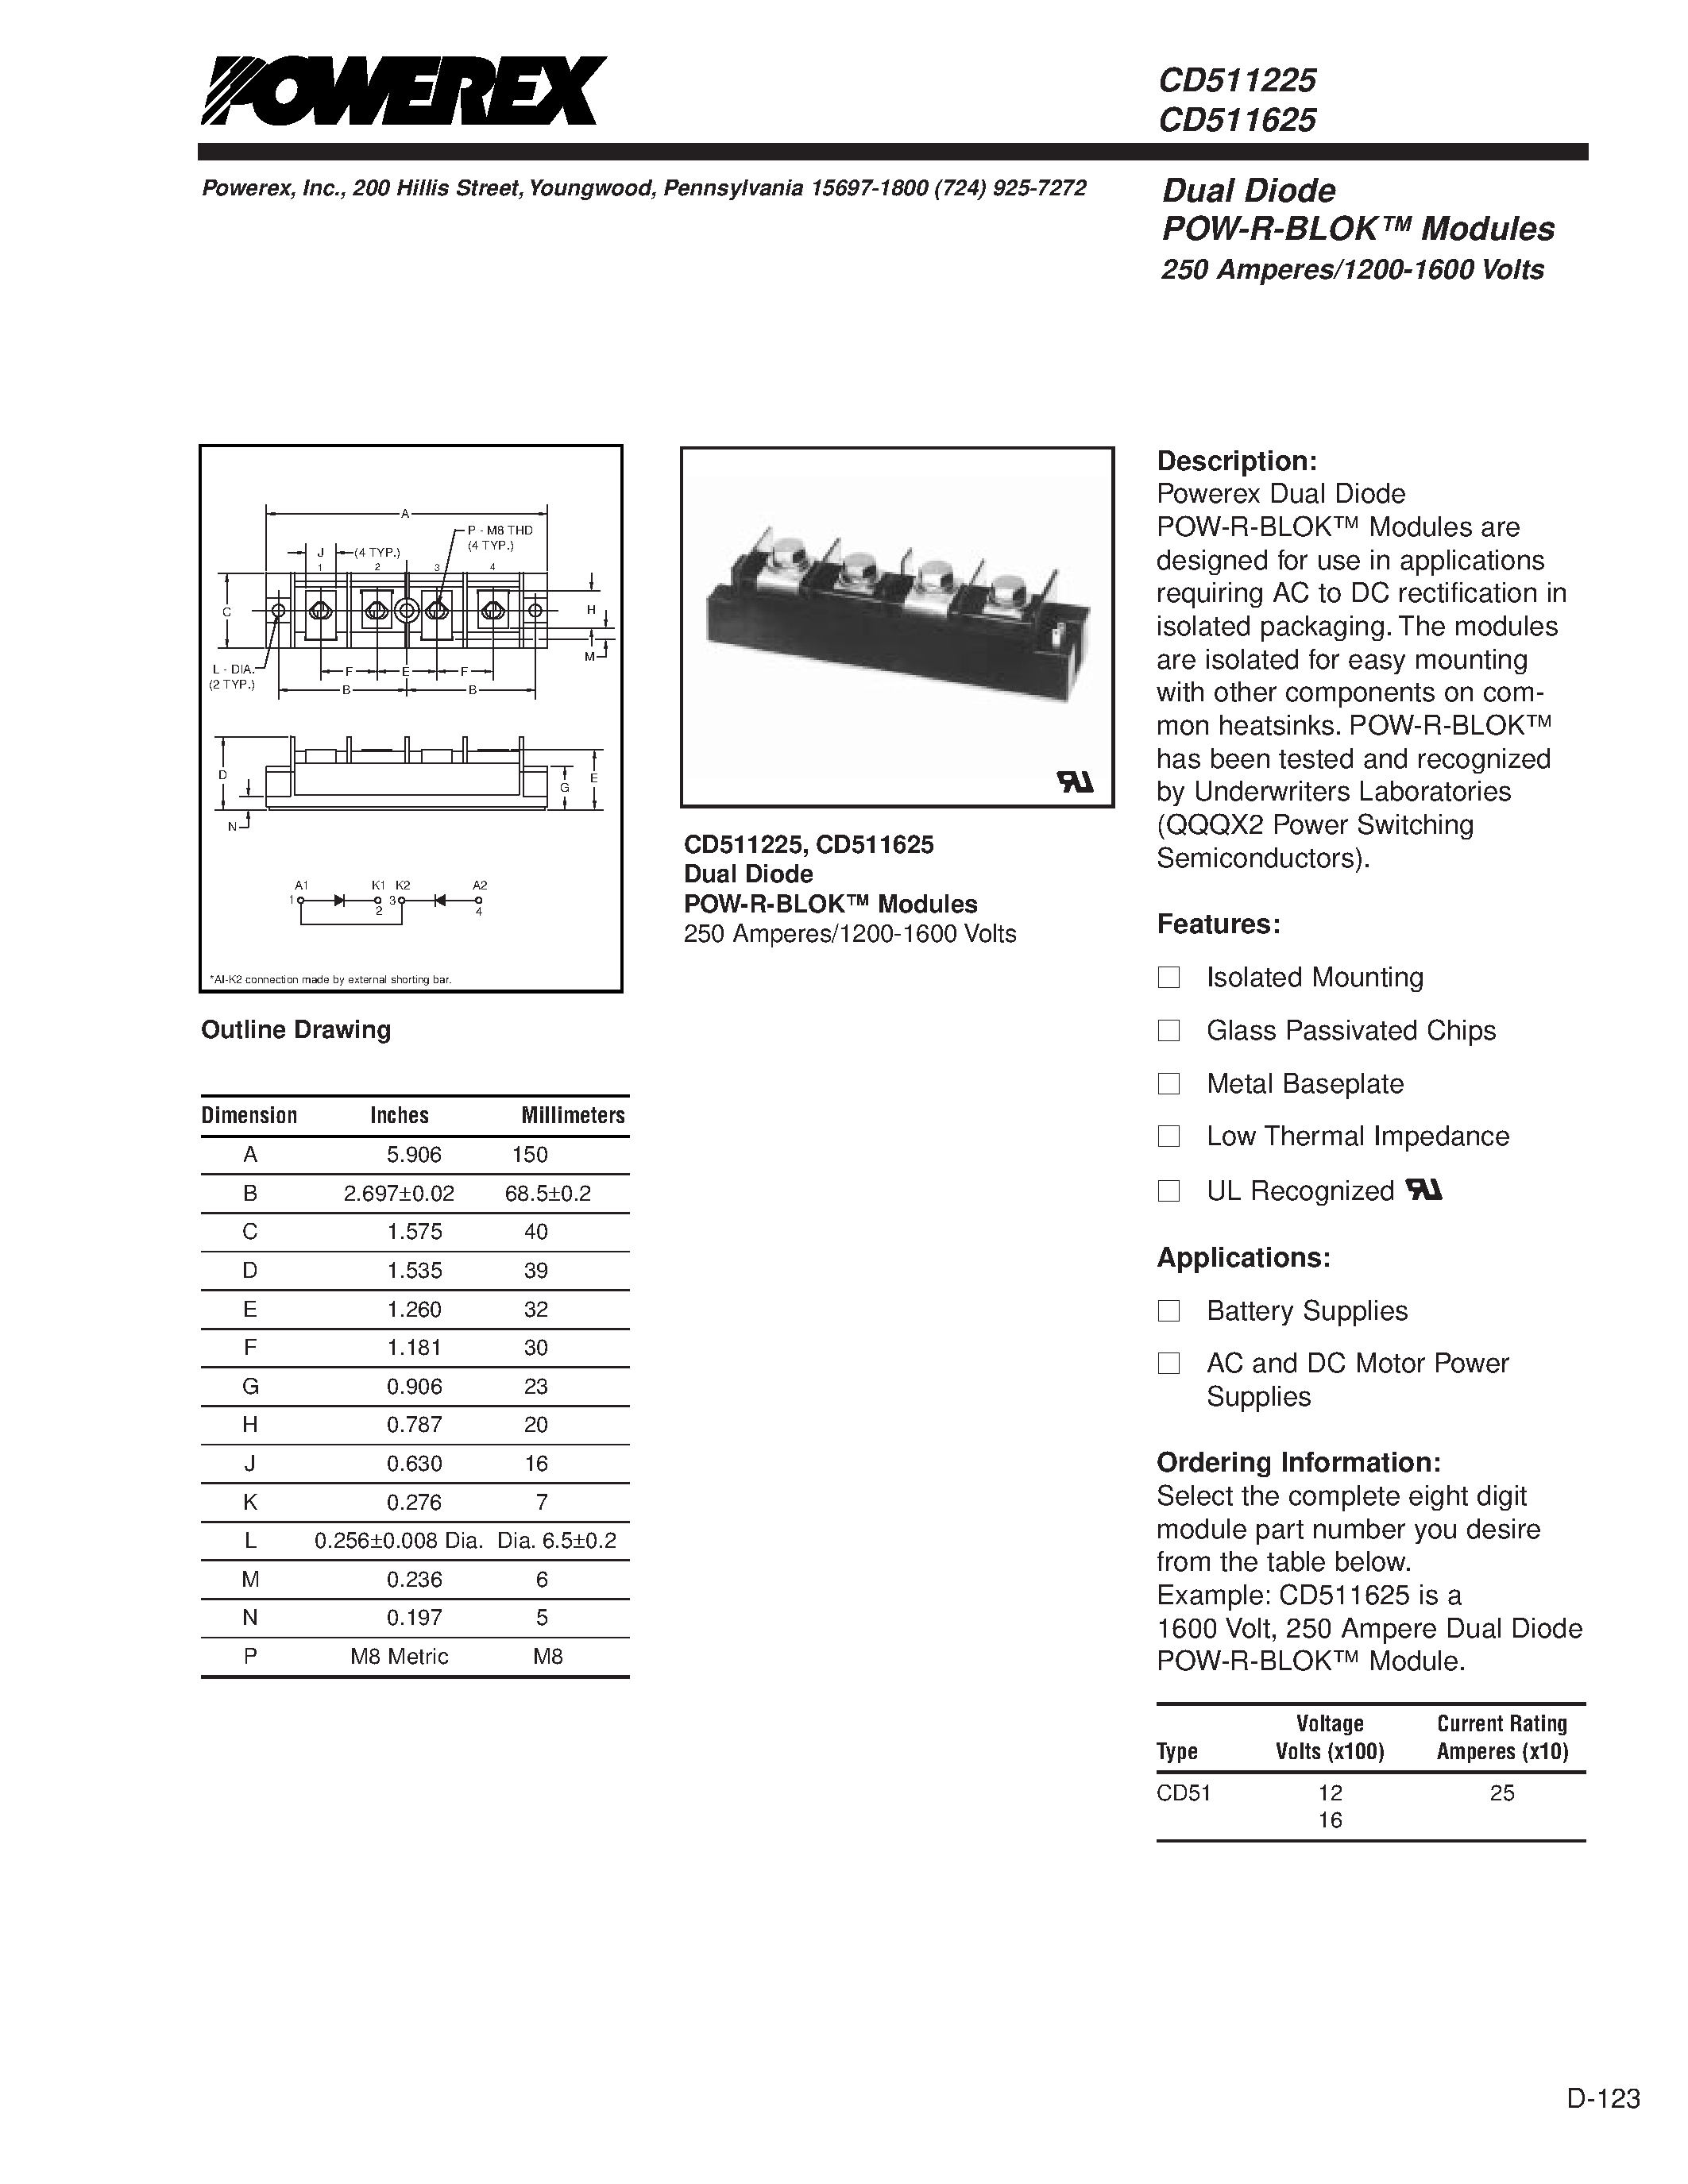 Datasheet CD511225 - Dual Diode POW-R-BLOK Modules 250 Amperes/1200-1600 Volts page 1